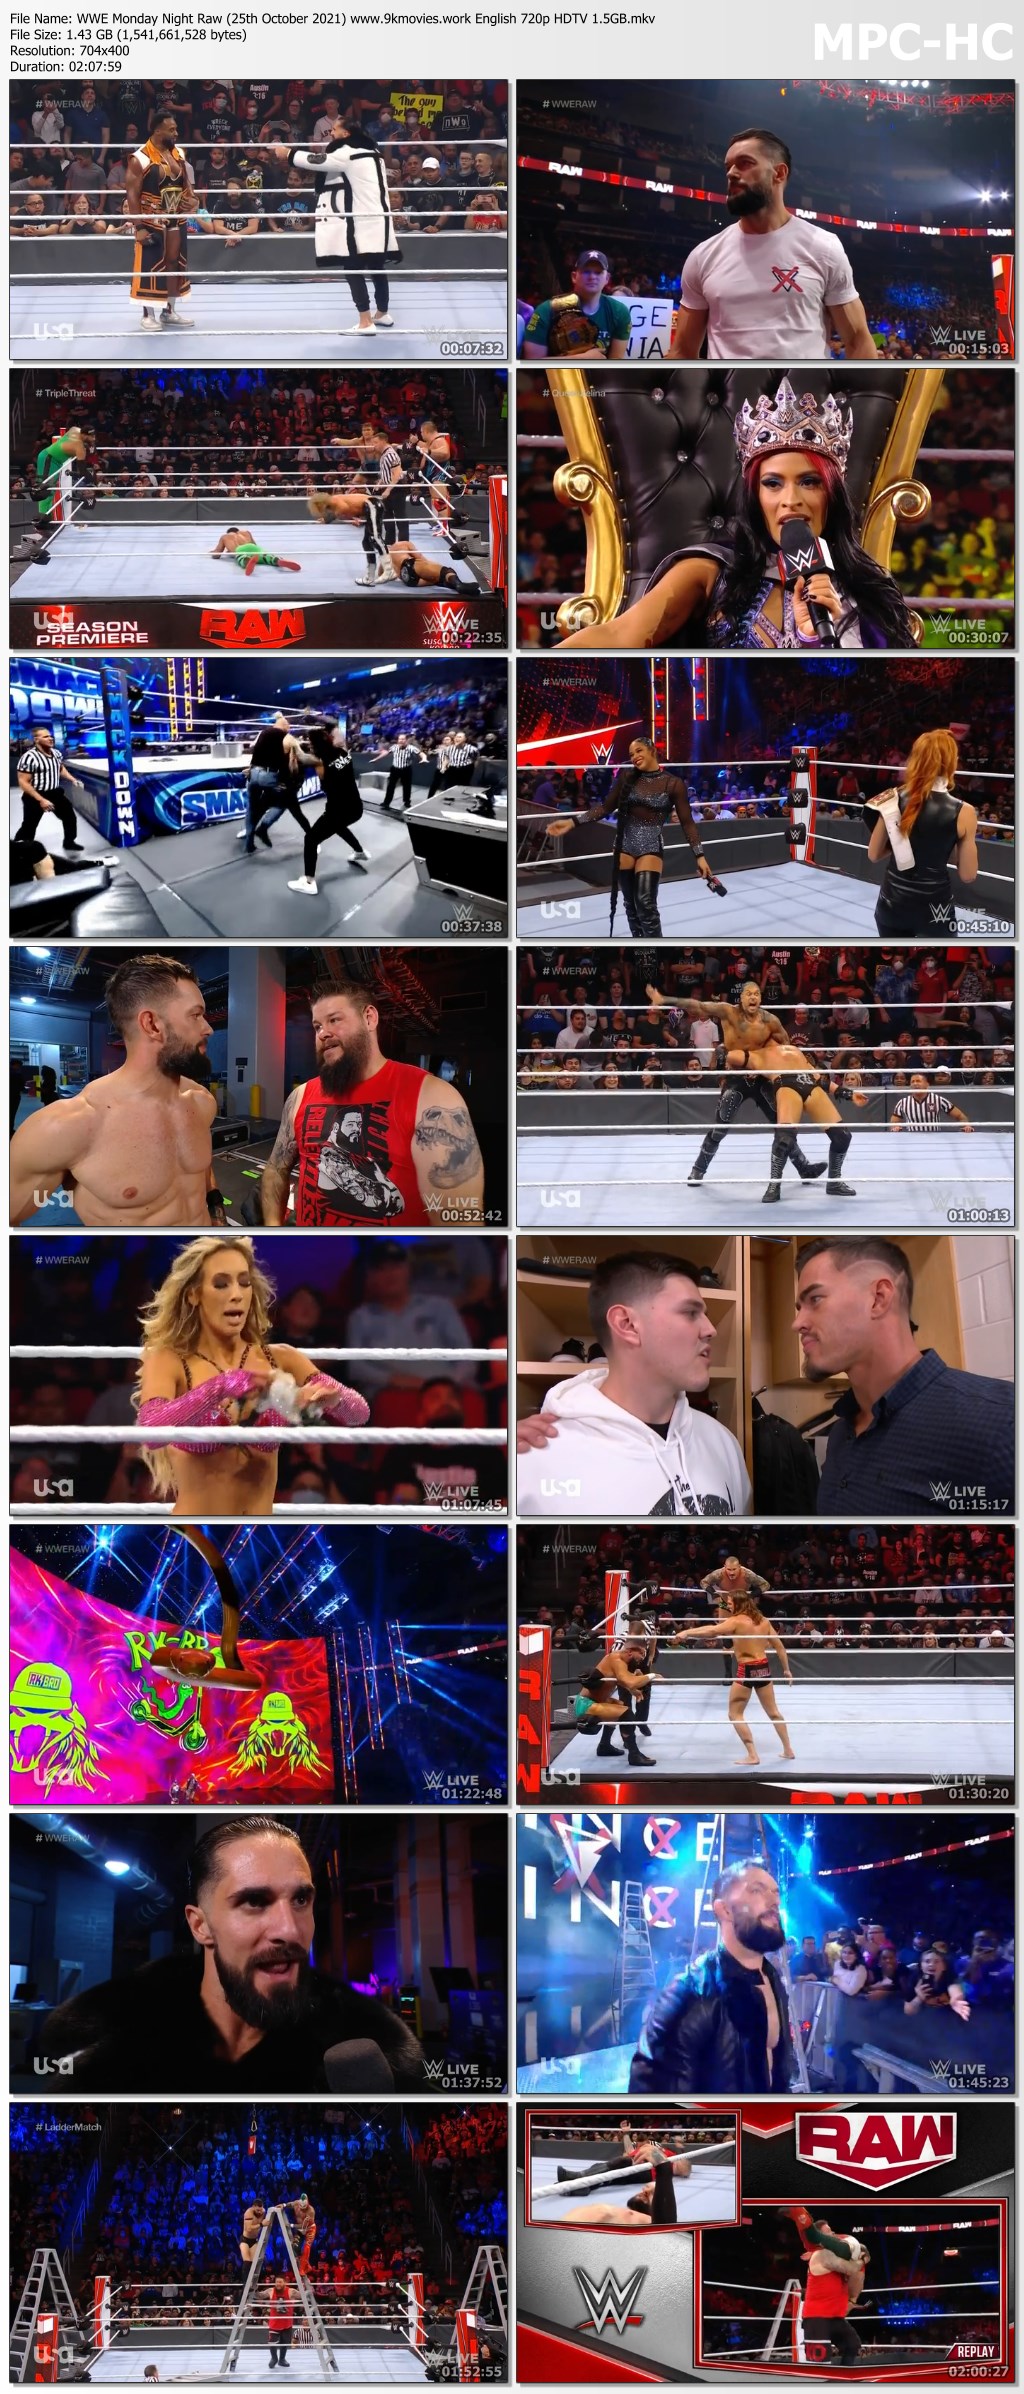 WWE Monday Night Raw 25th October 2021 www.9kmovies.work English 720p HDTV 1.5GB.mkv thumbs4a6ba7cb8955eee5